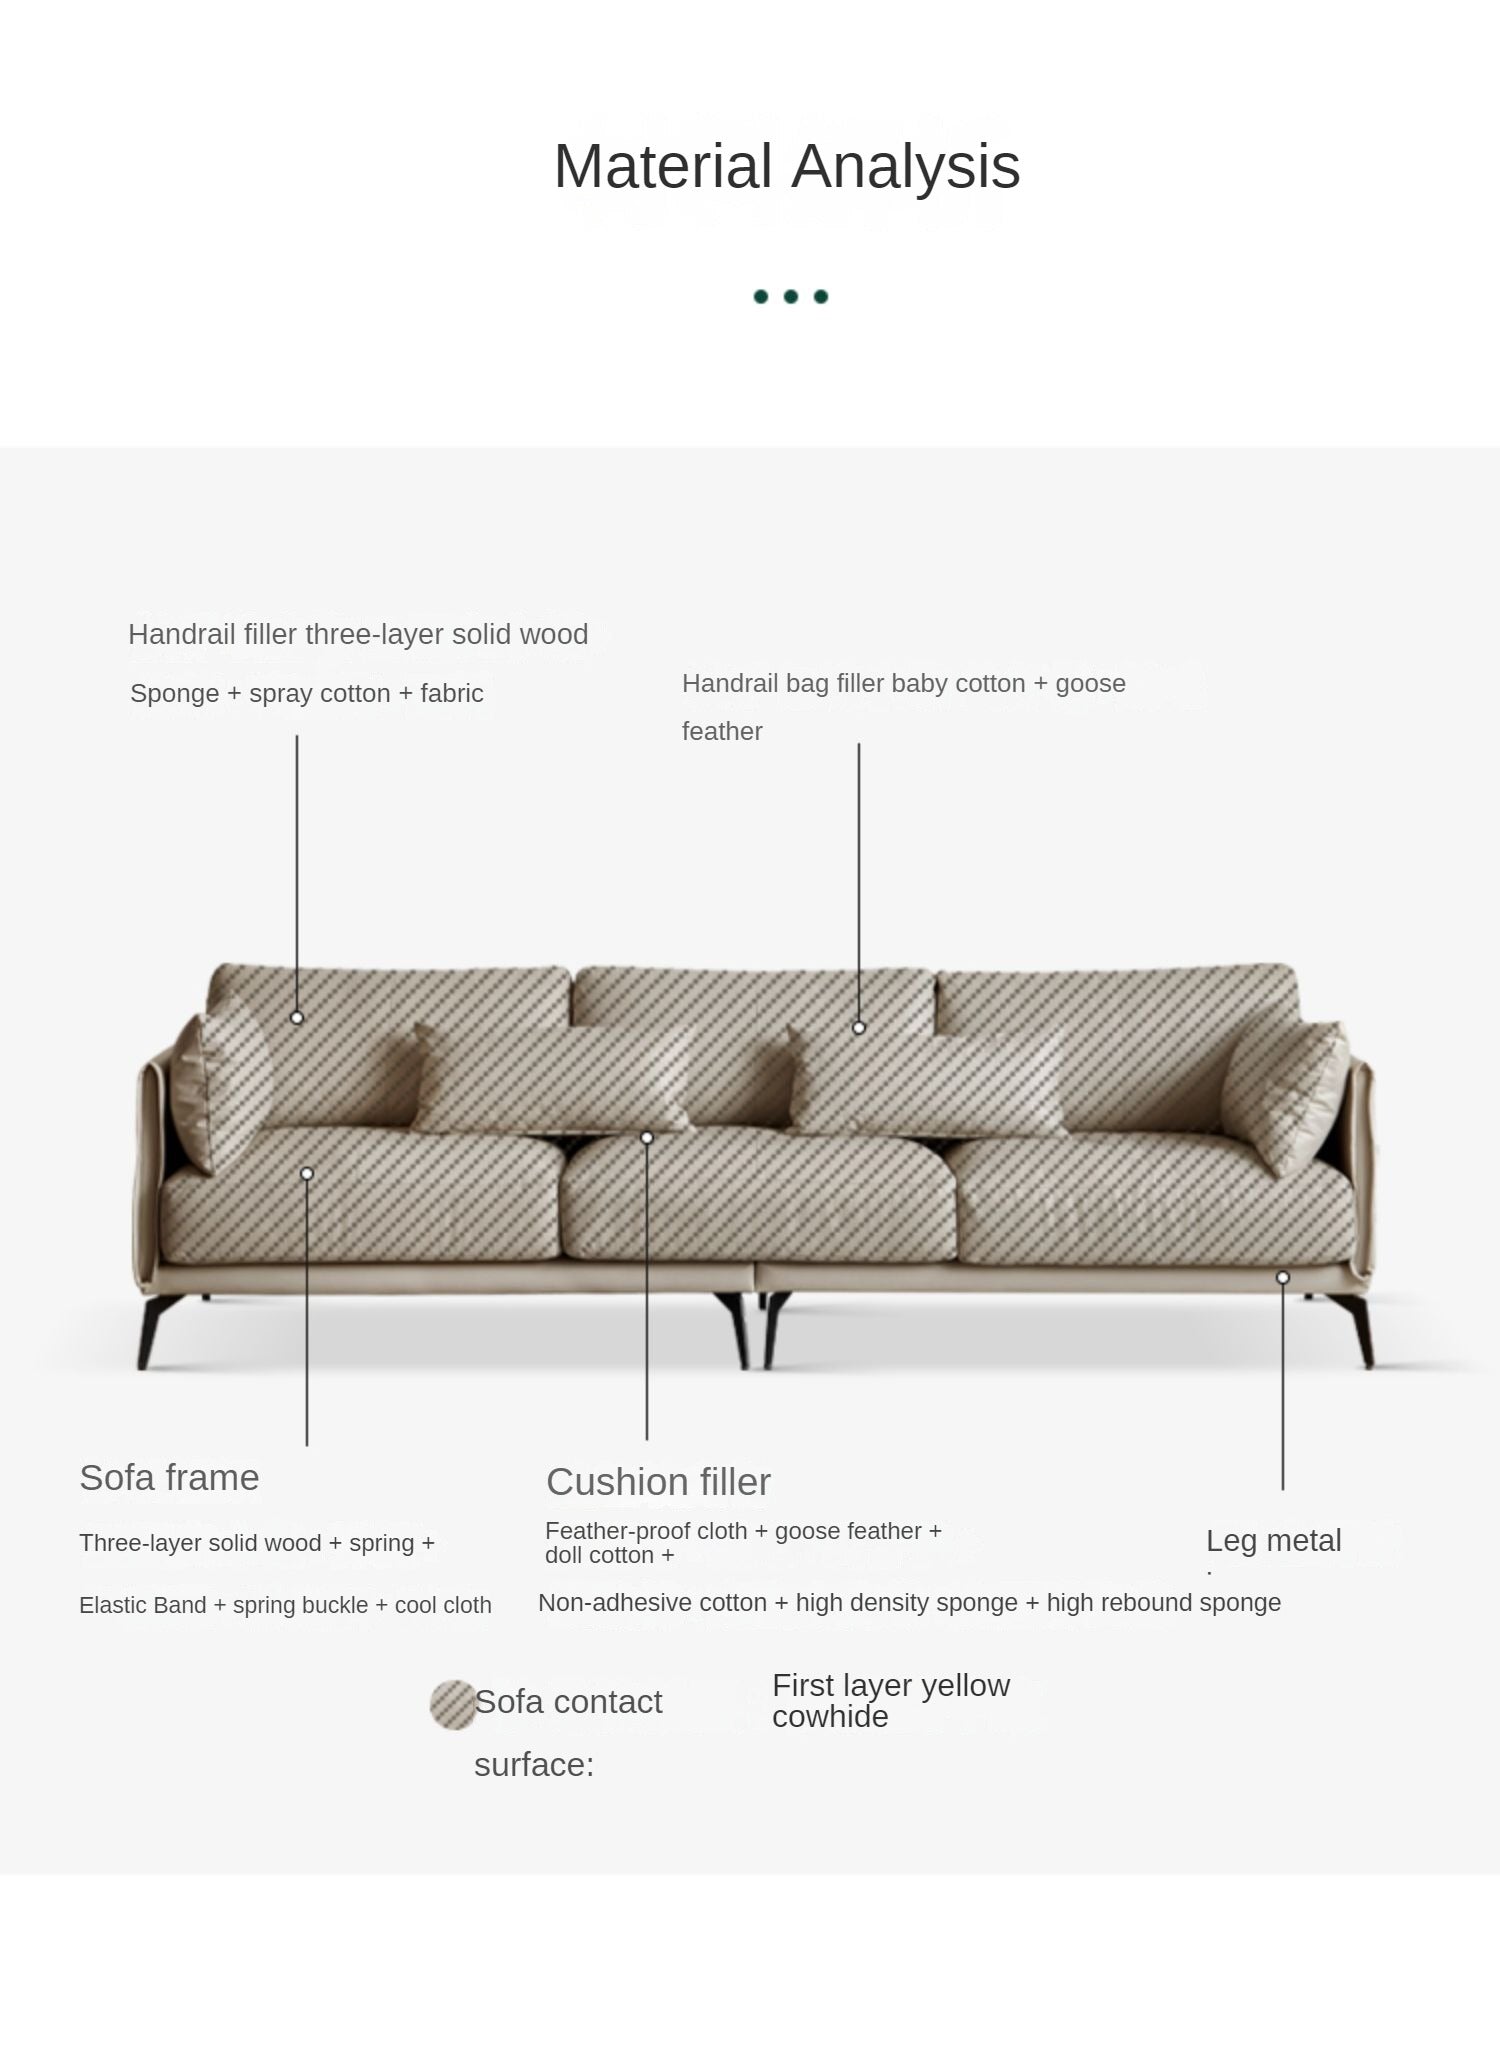 Off-white leather sofa"